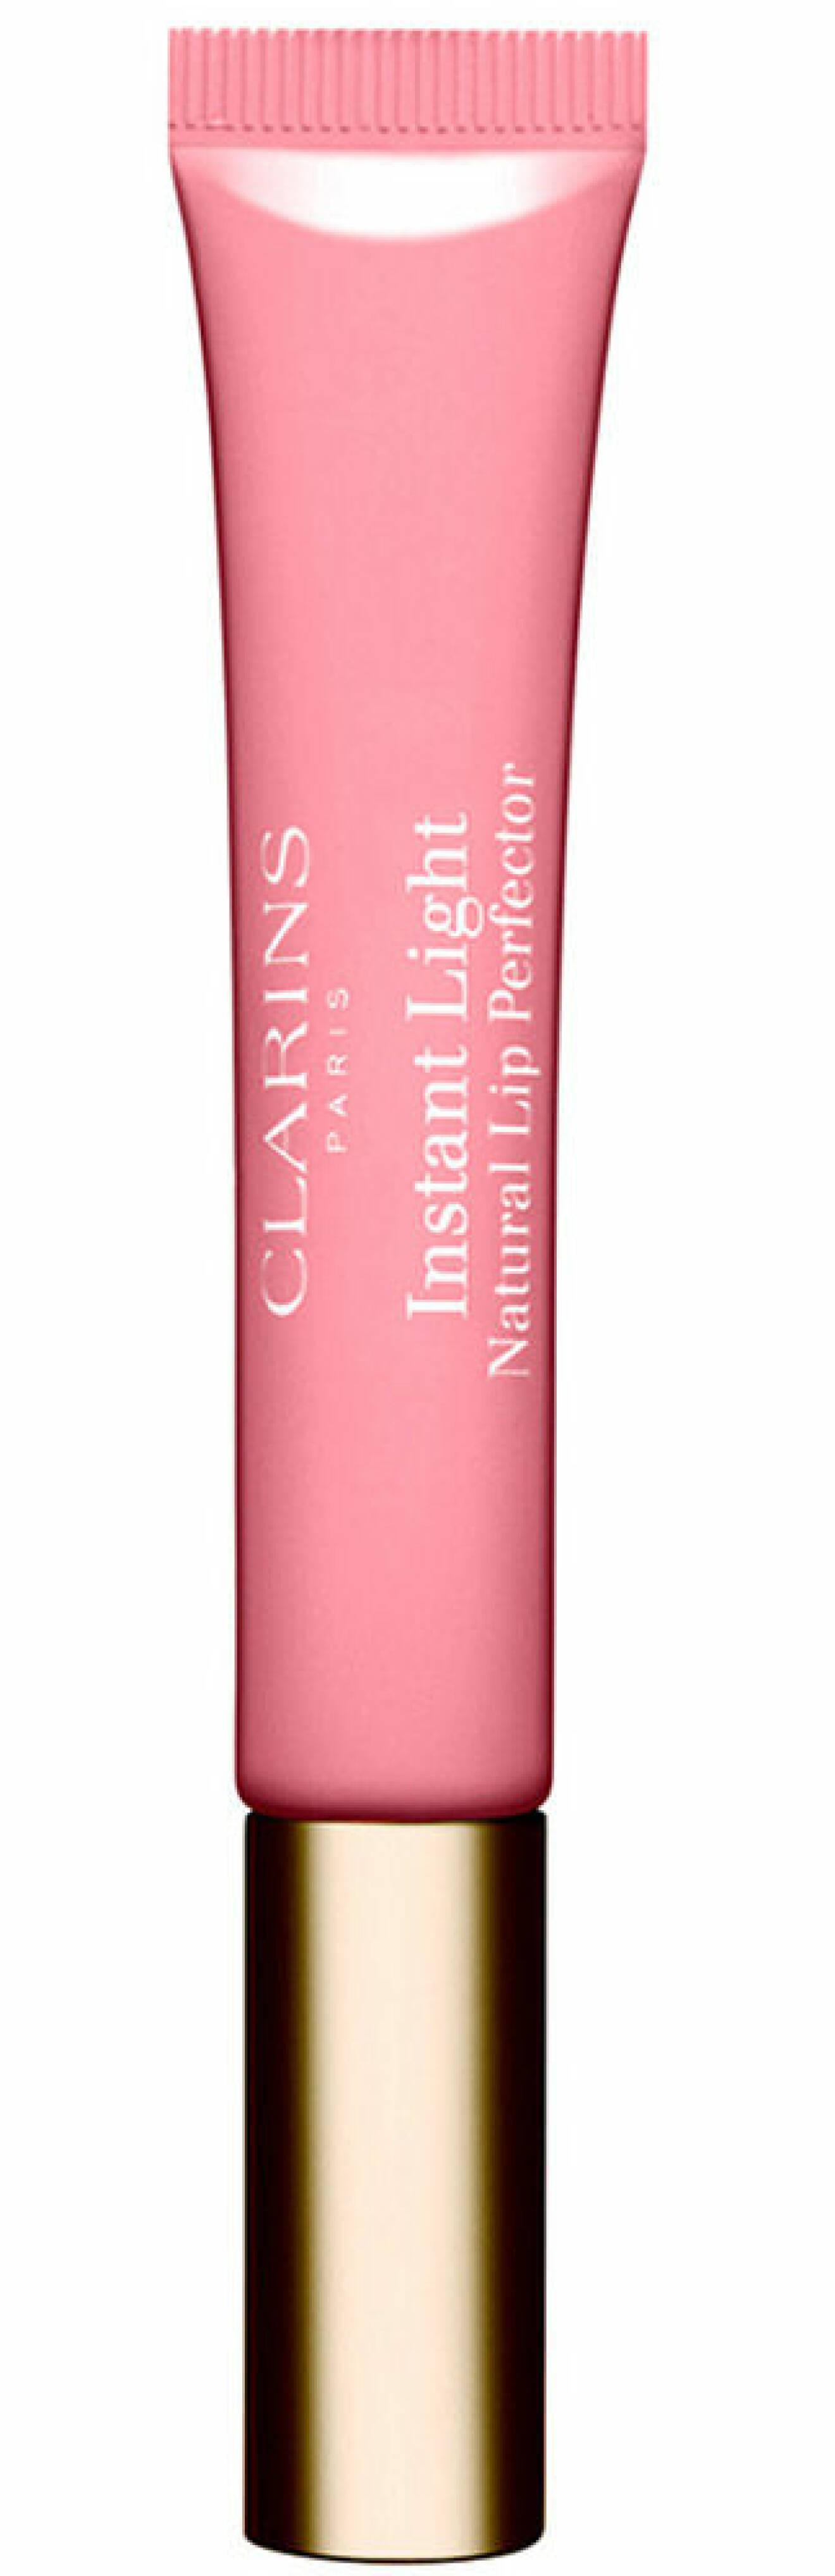 Clarin's Natural Lip Perfector